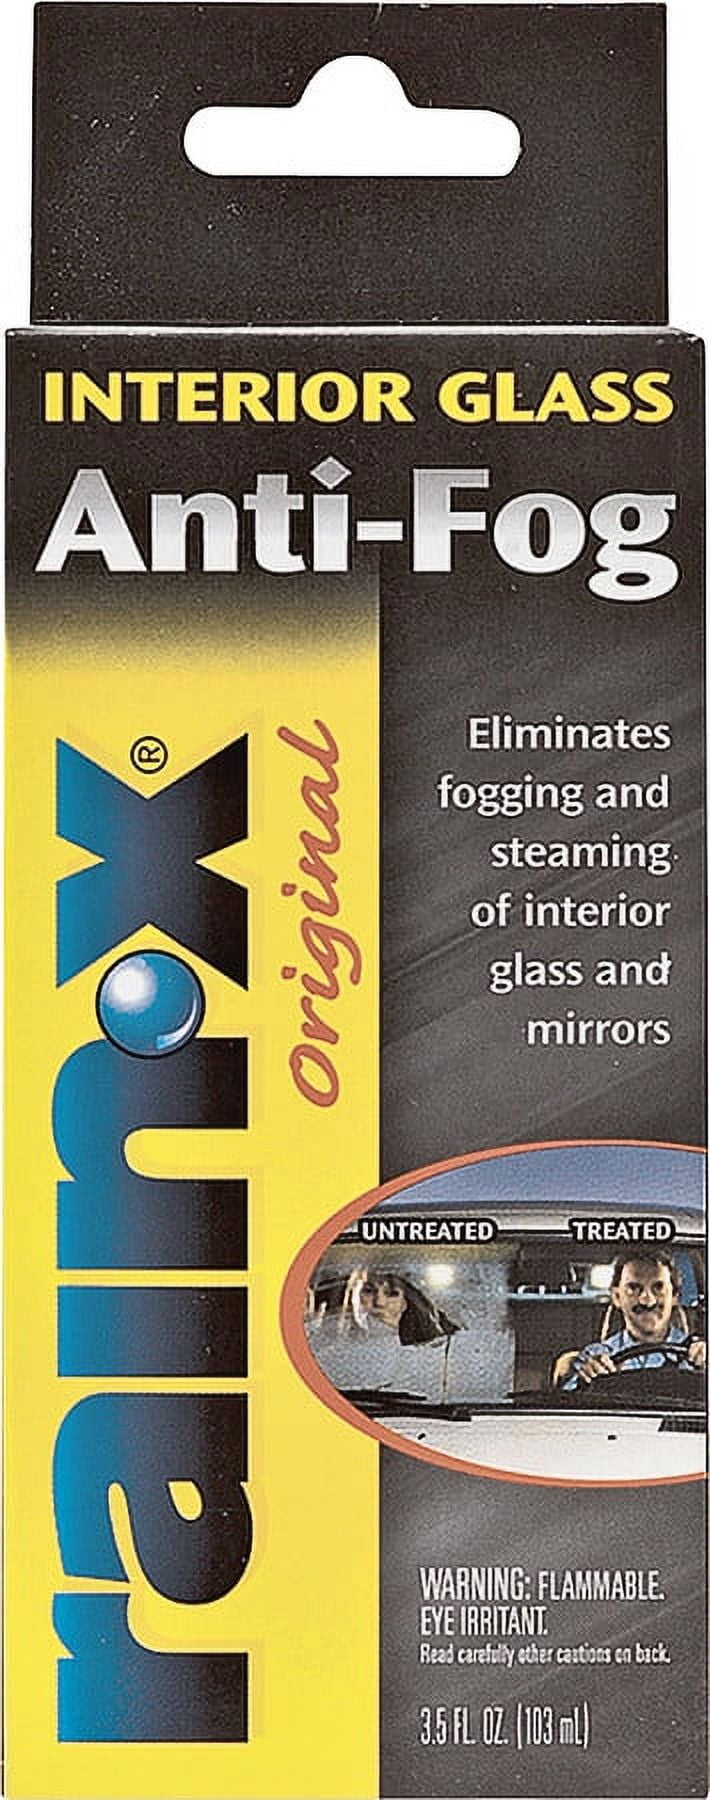 Rain X Rain-X Interior Glass Anti Fog 103ml *****FREE POSTAGE*****